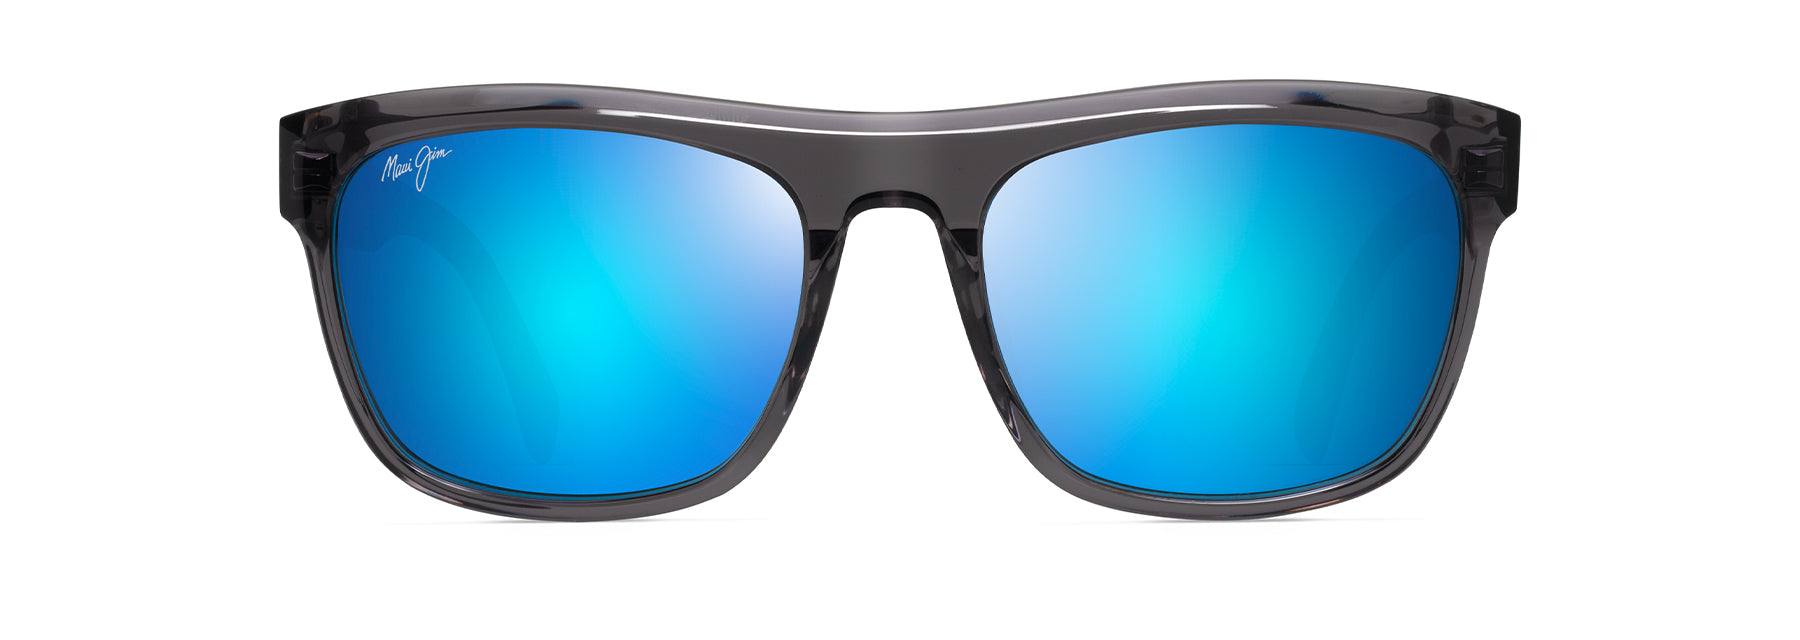 Maui Jim S-Turns Sunglasses